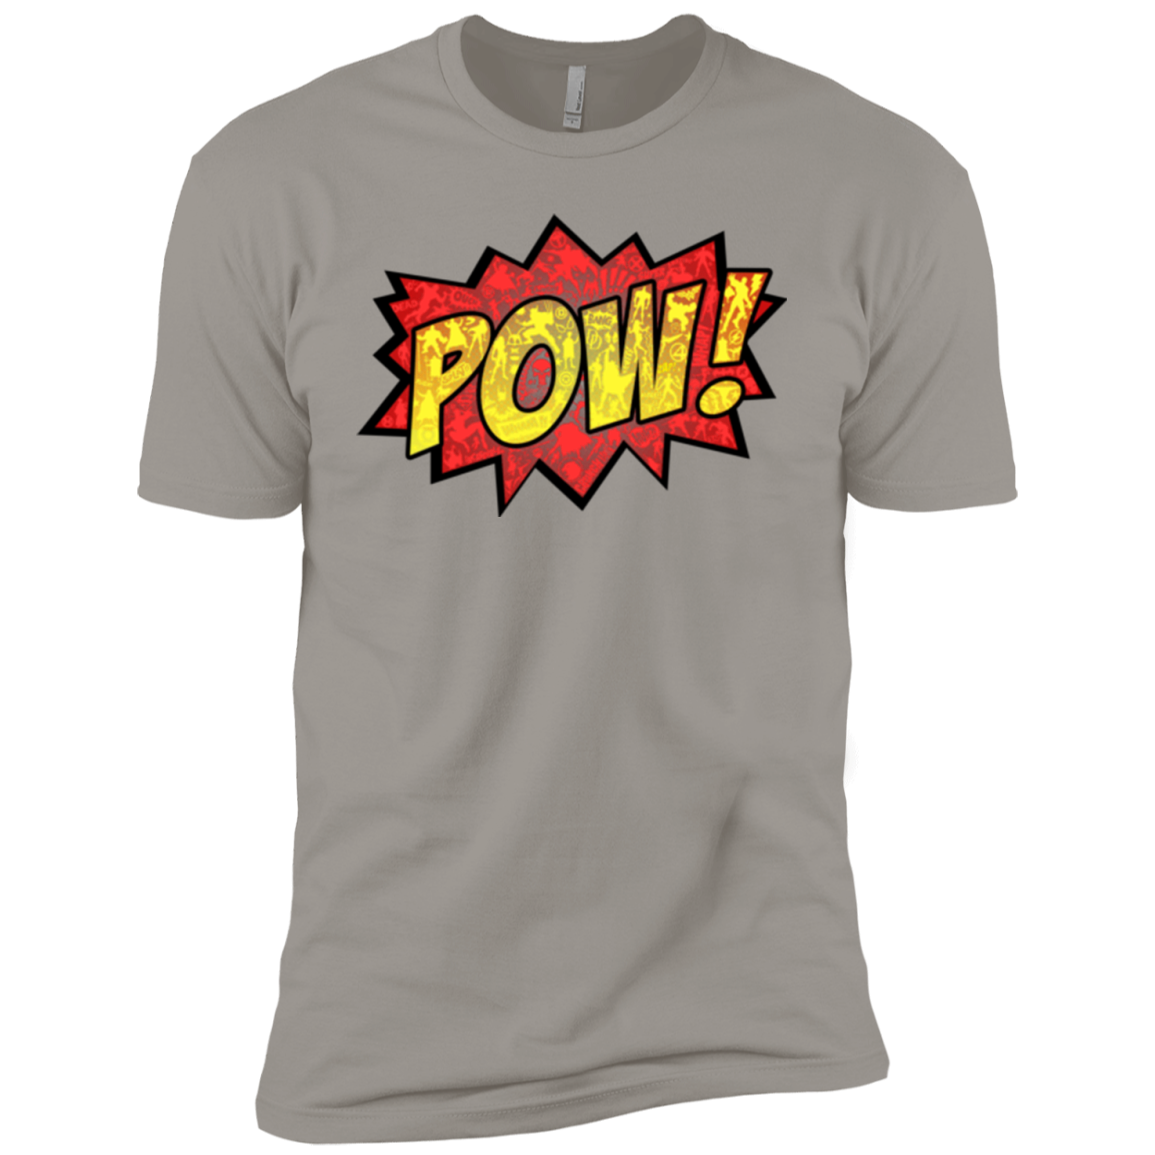 pow Boys Premium T-Shirt